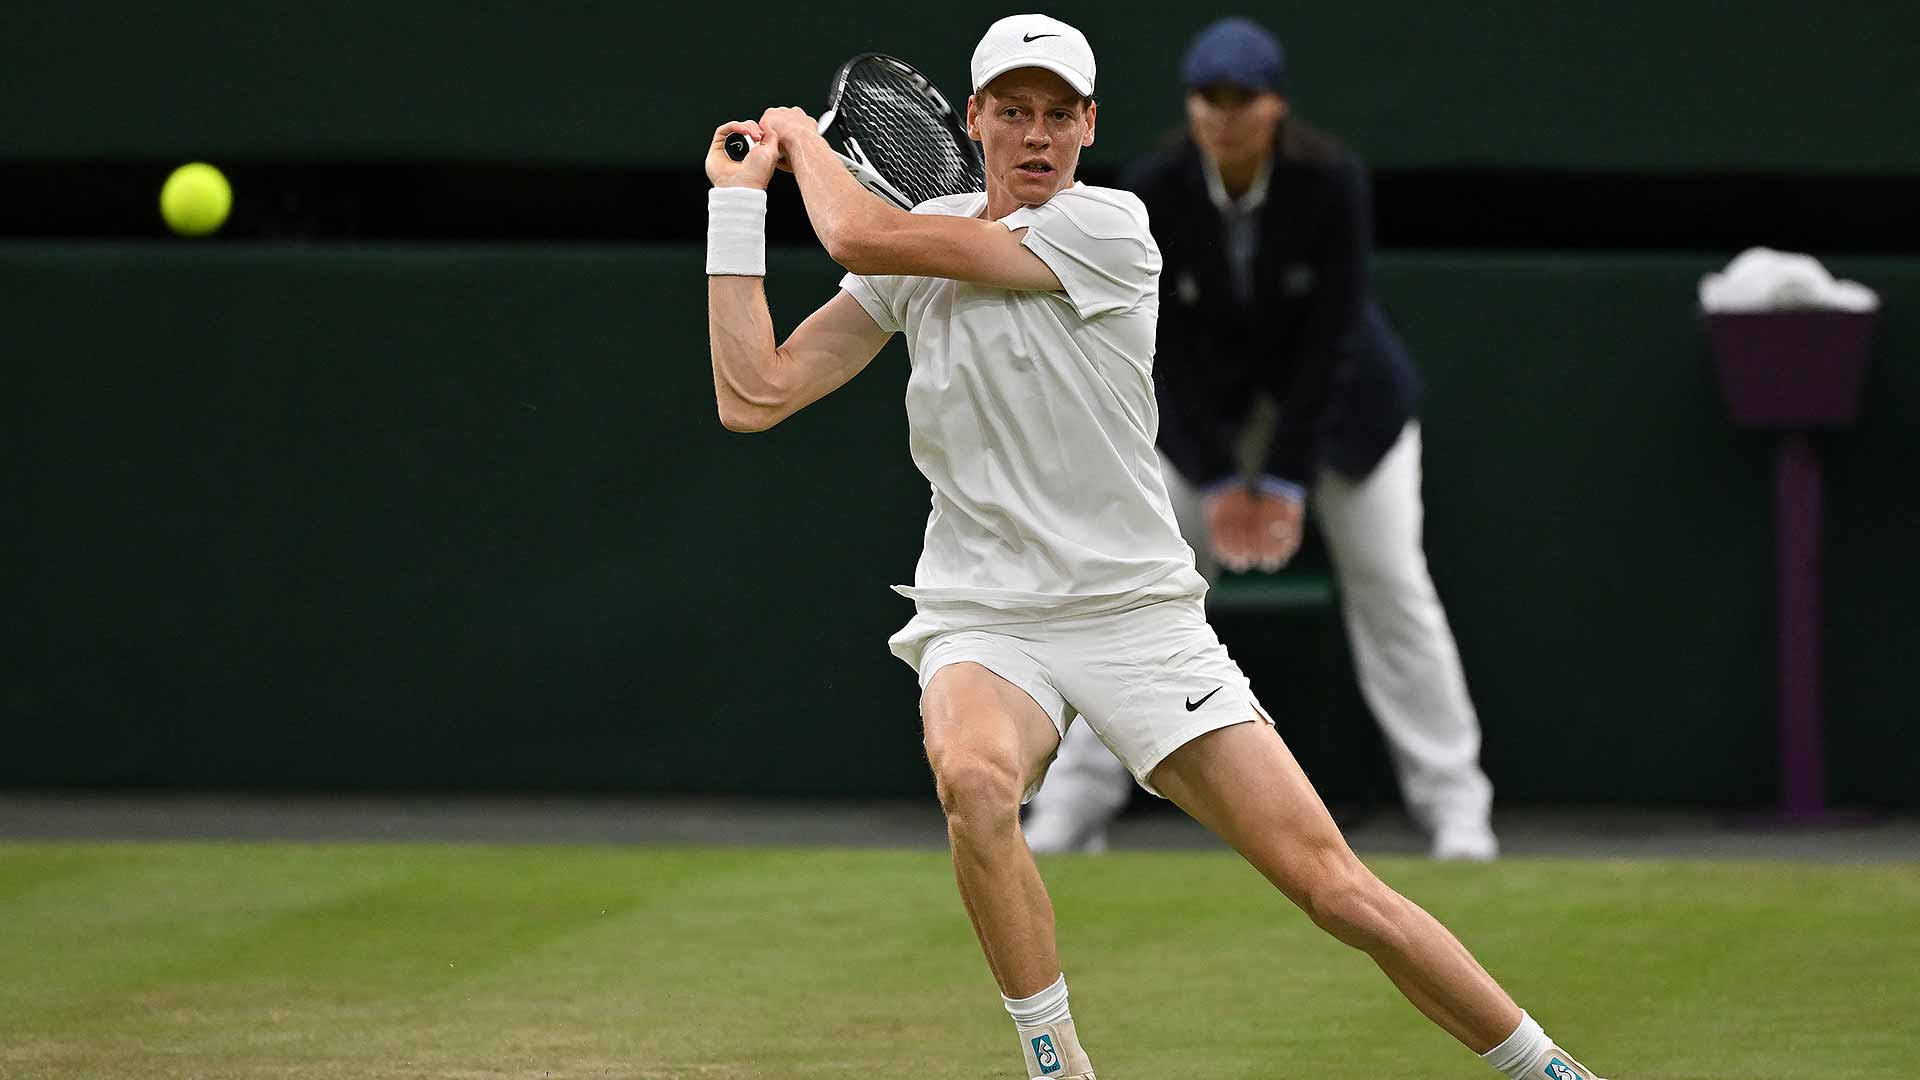 Jannik Sinner enjoys his first straight-sets win of the tournament Friday at Wimbledon.